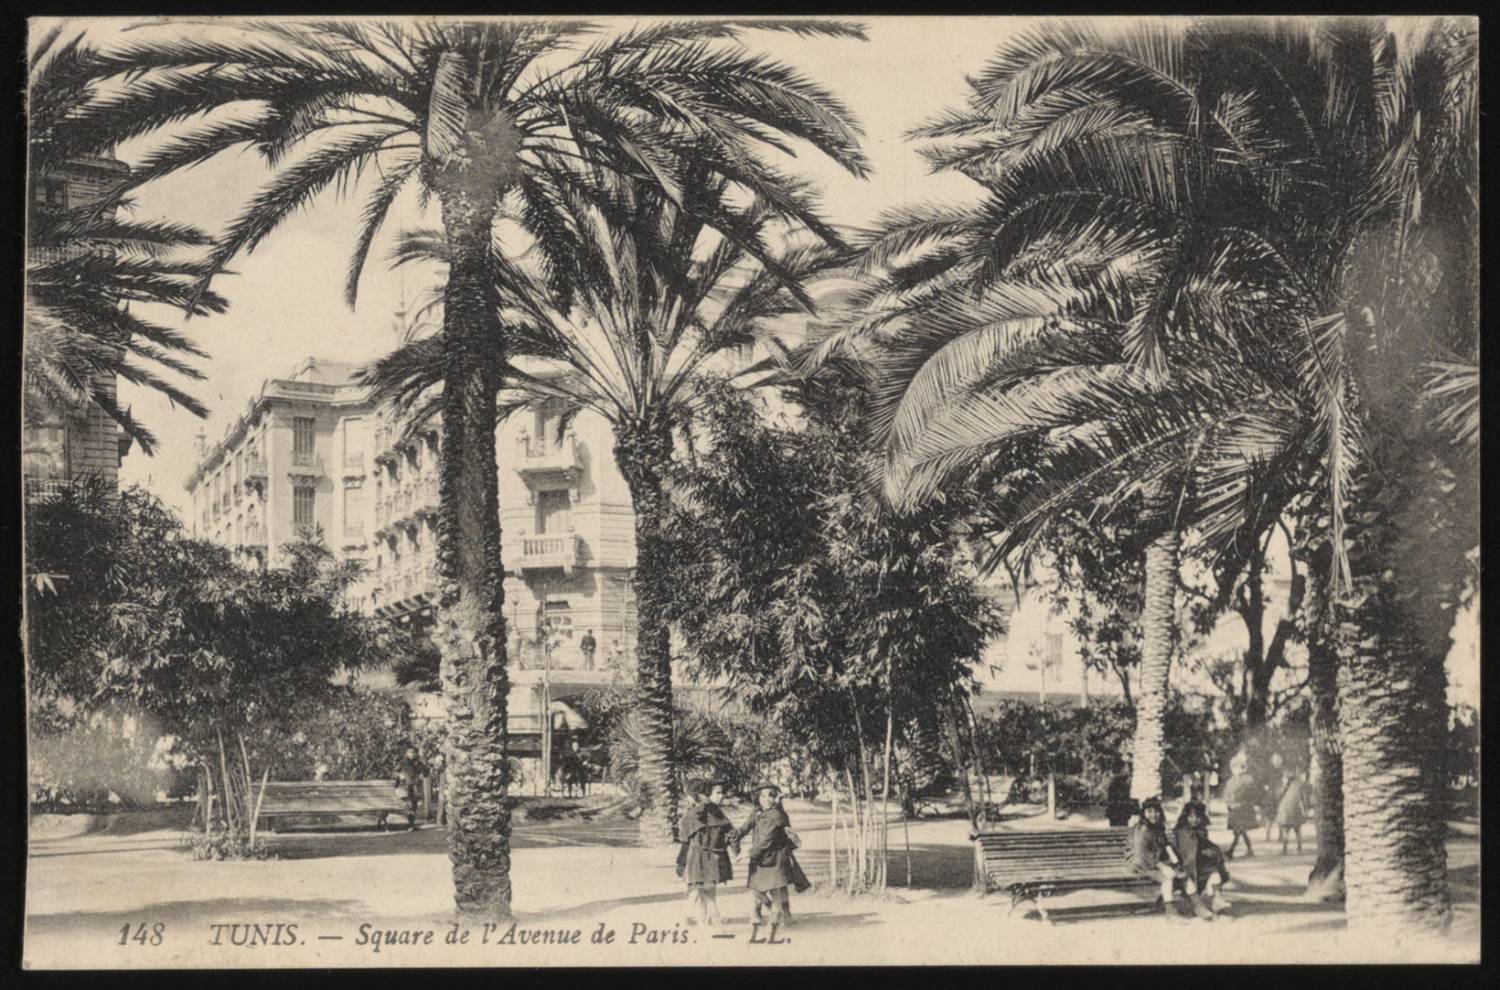 148. Tunis- Public Square on the Avenue de Paris